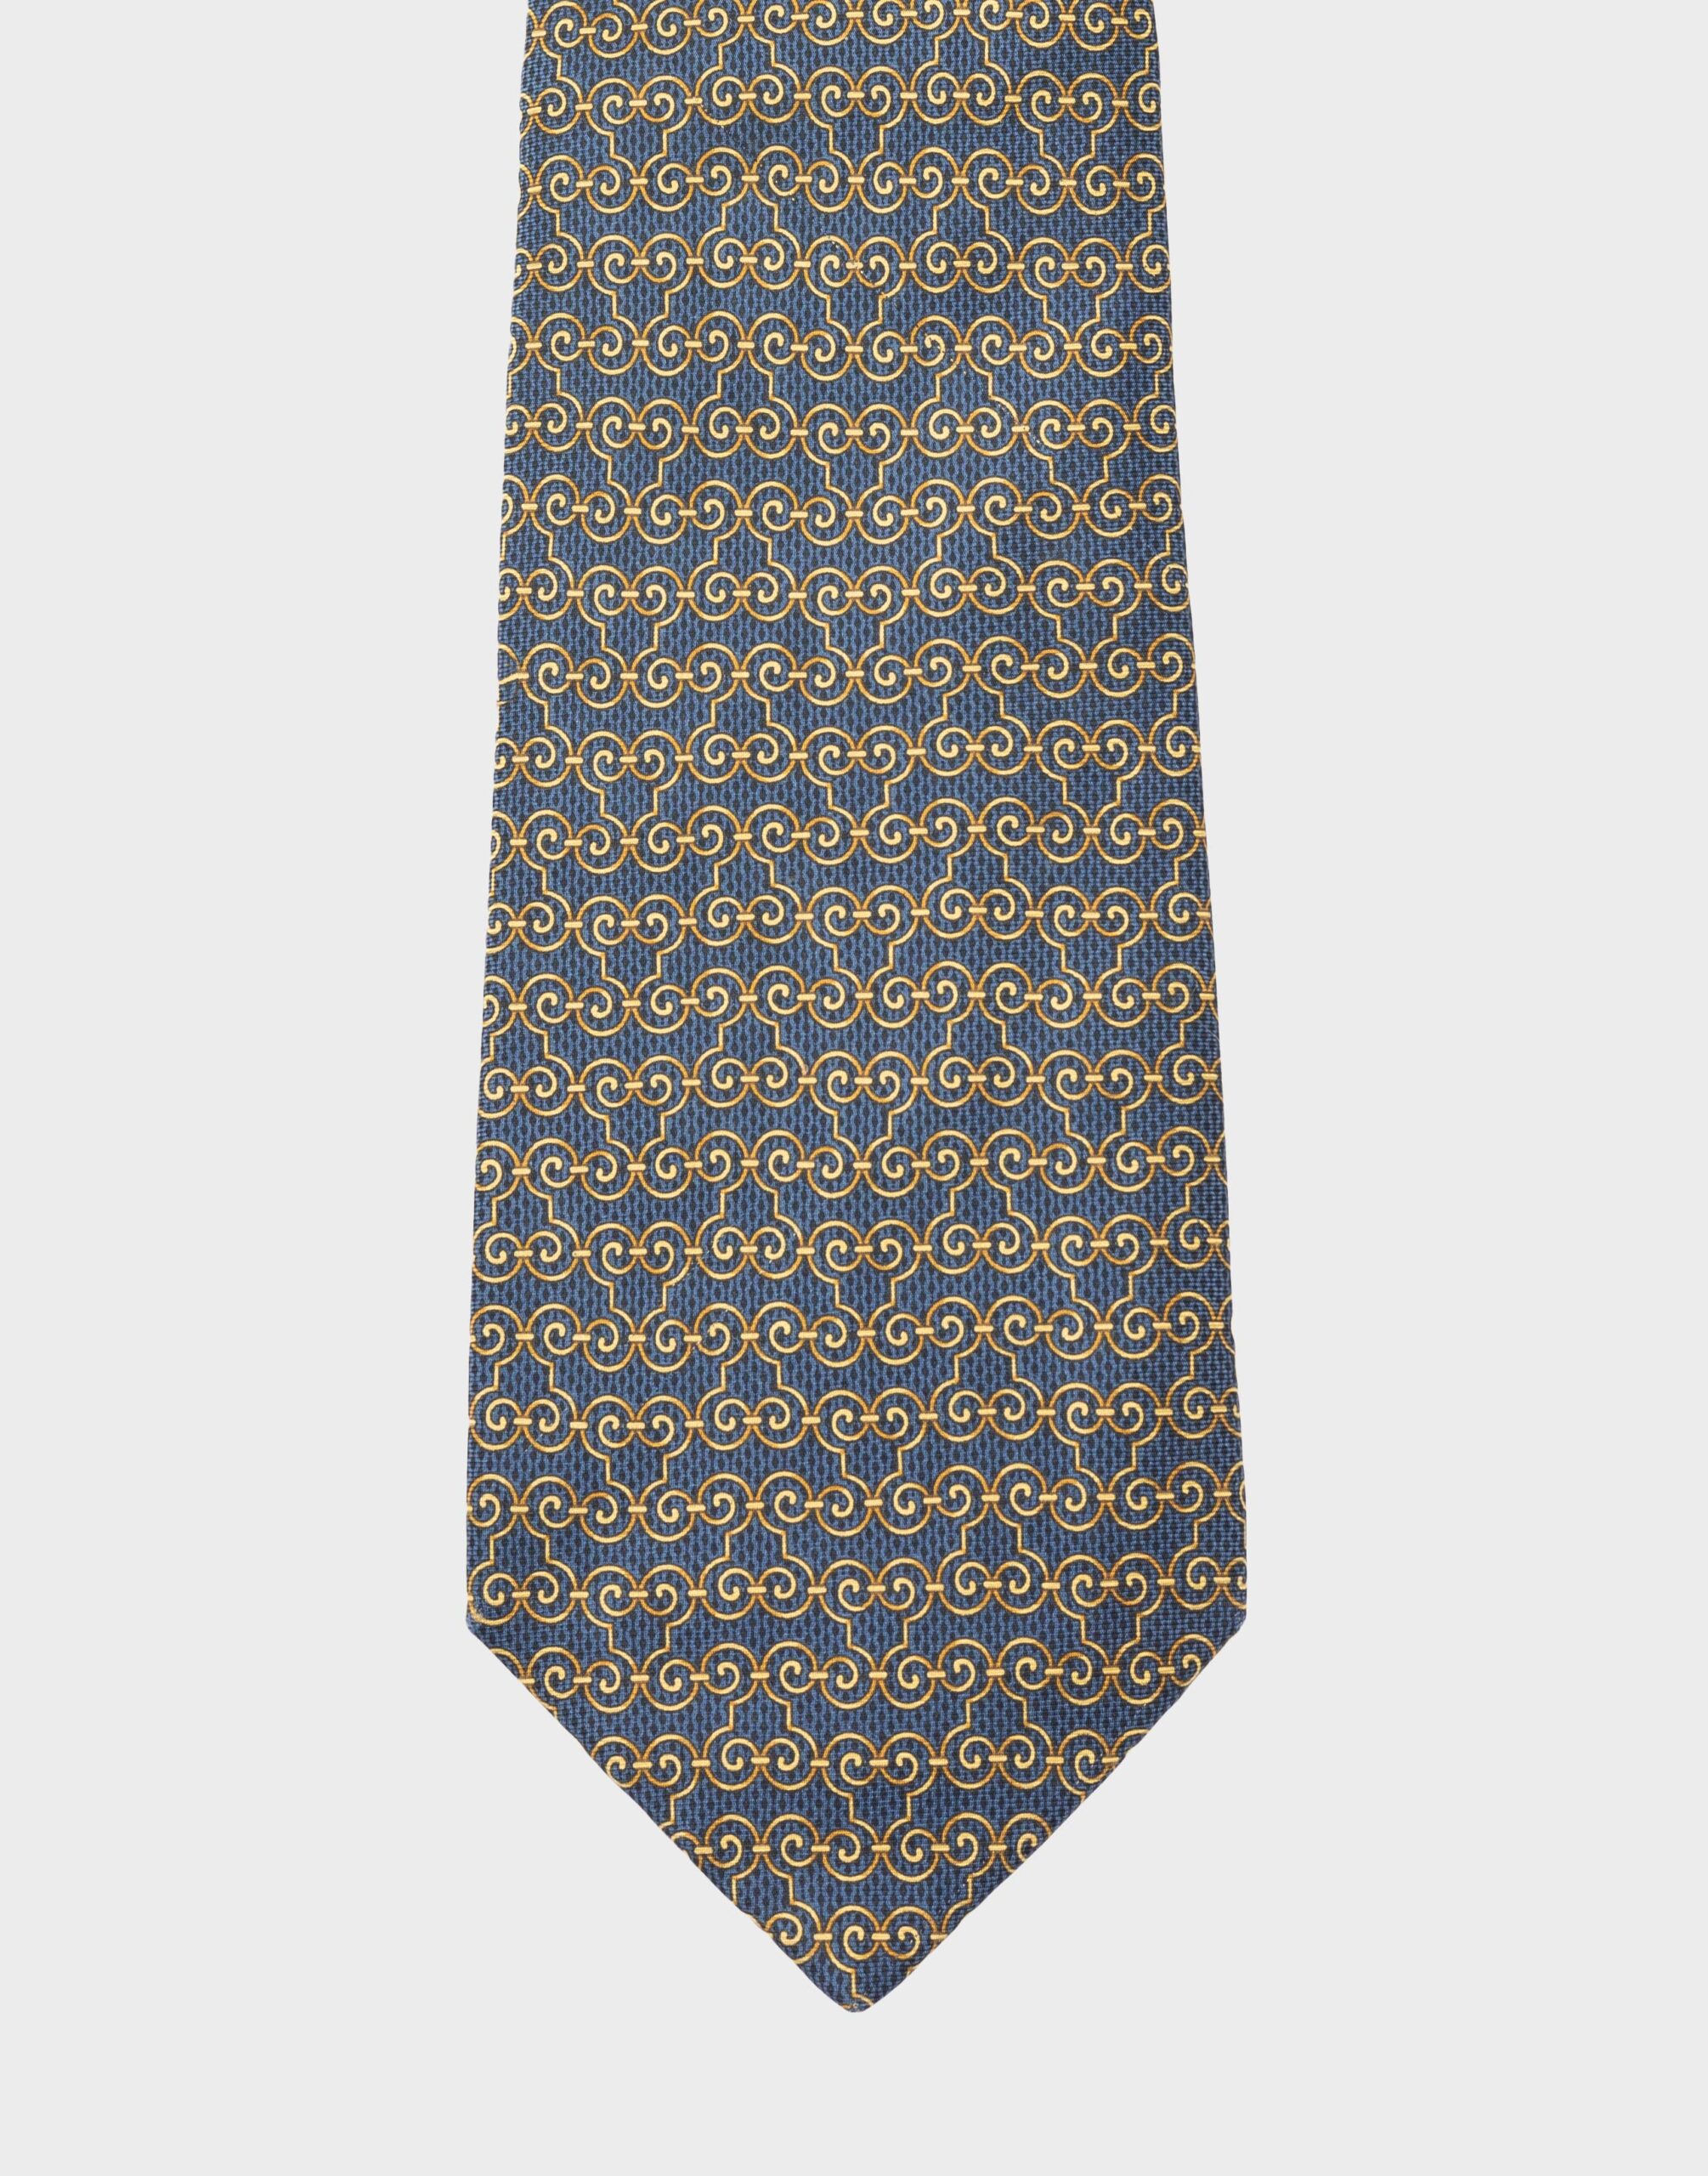 blue silk tie with gold geometric pattern